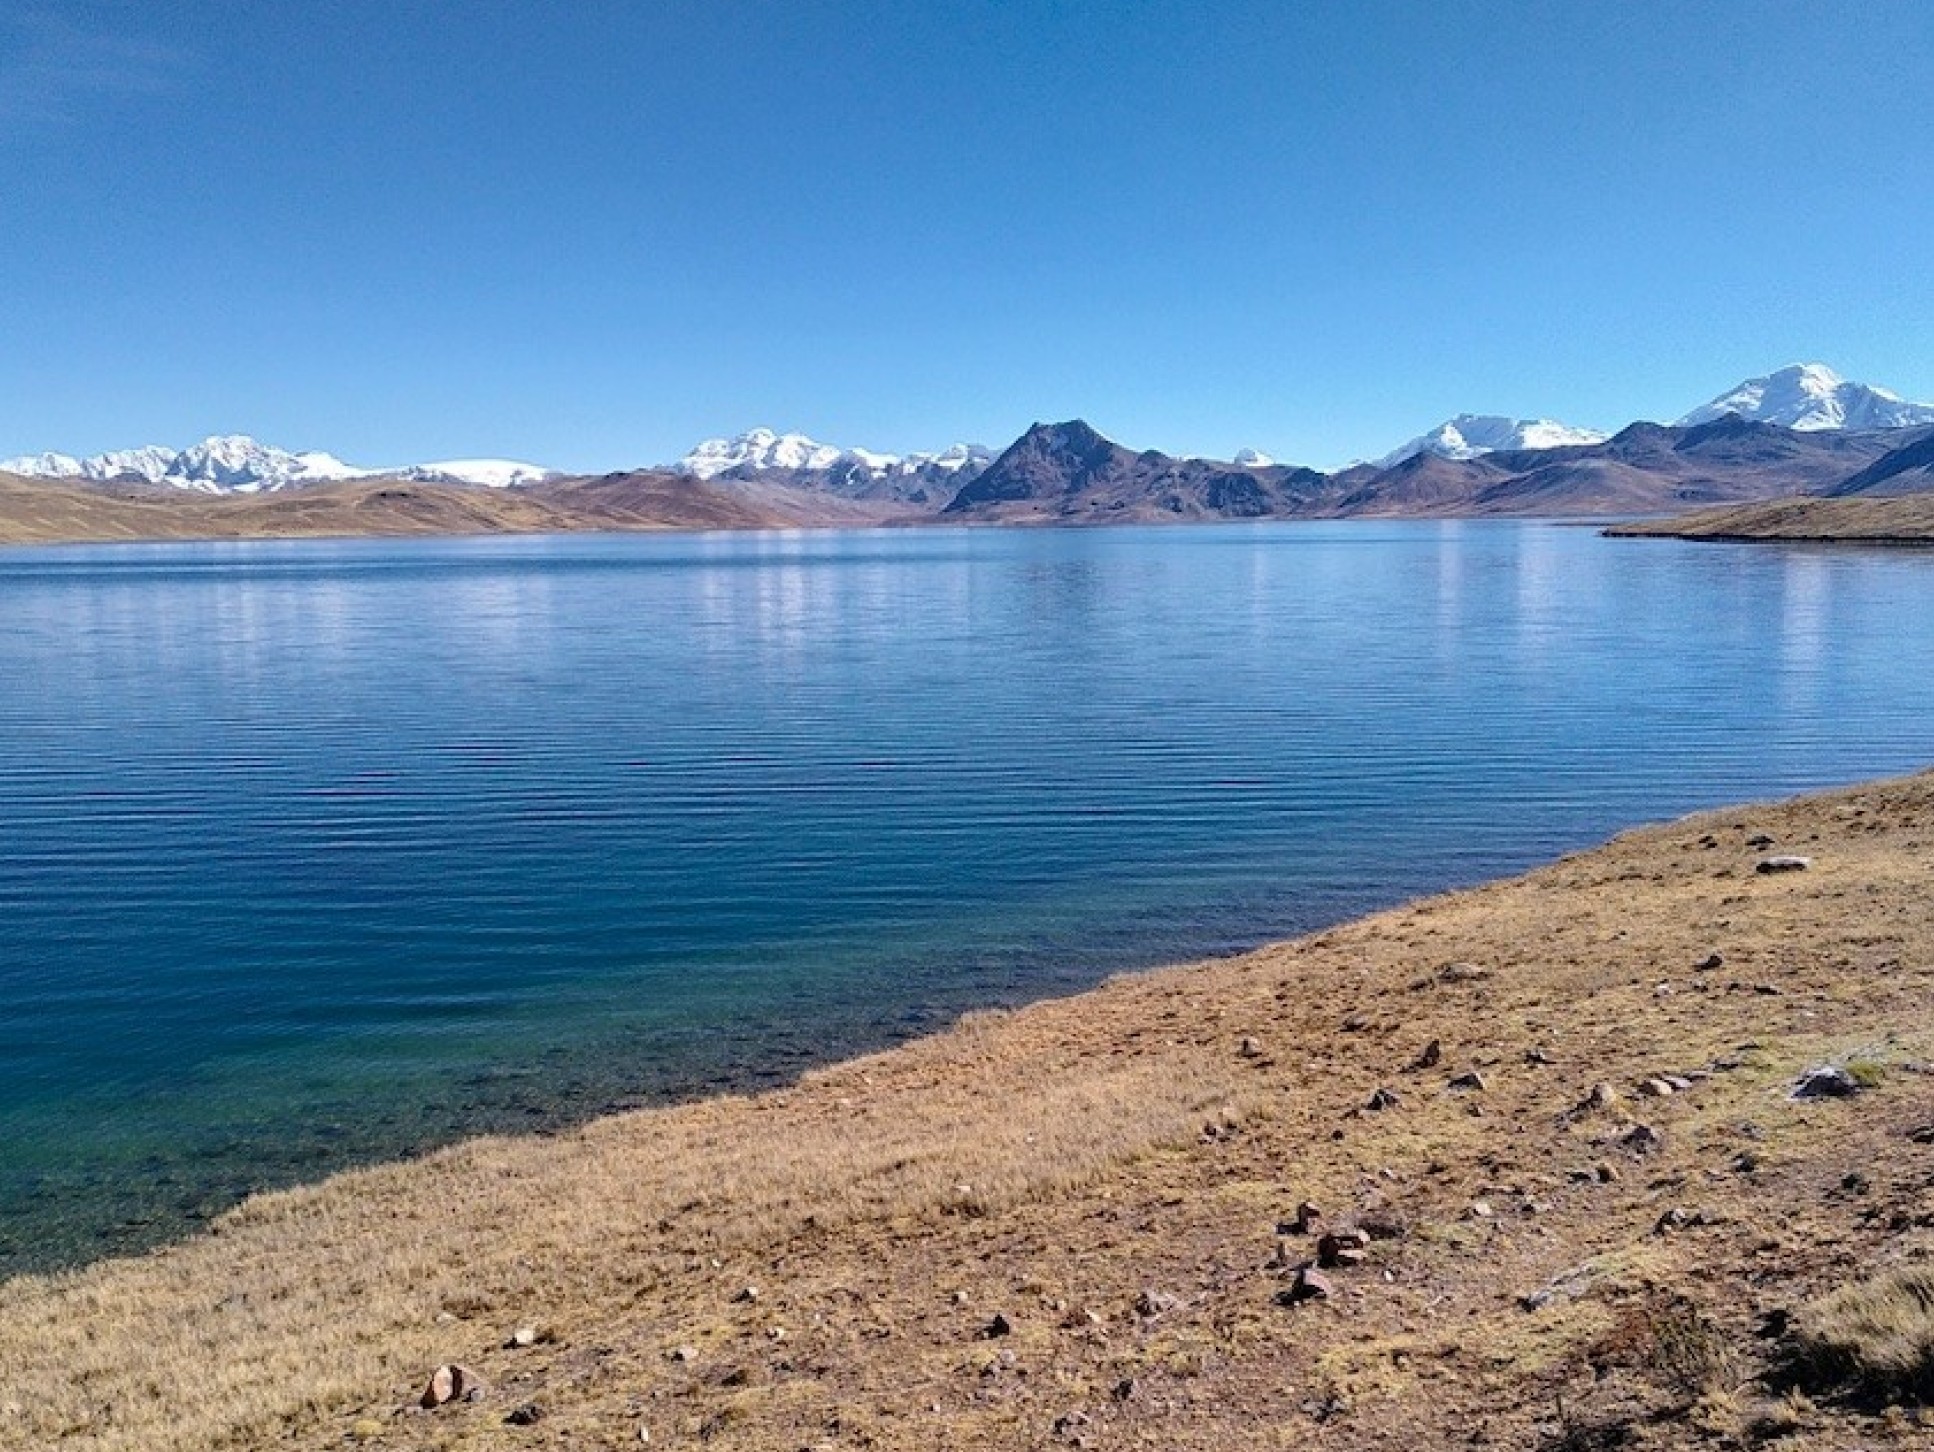 Sibinacocha lake in the upper Vilcanota basin, Peru, affected by glacier shrinkage